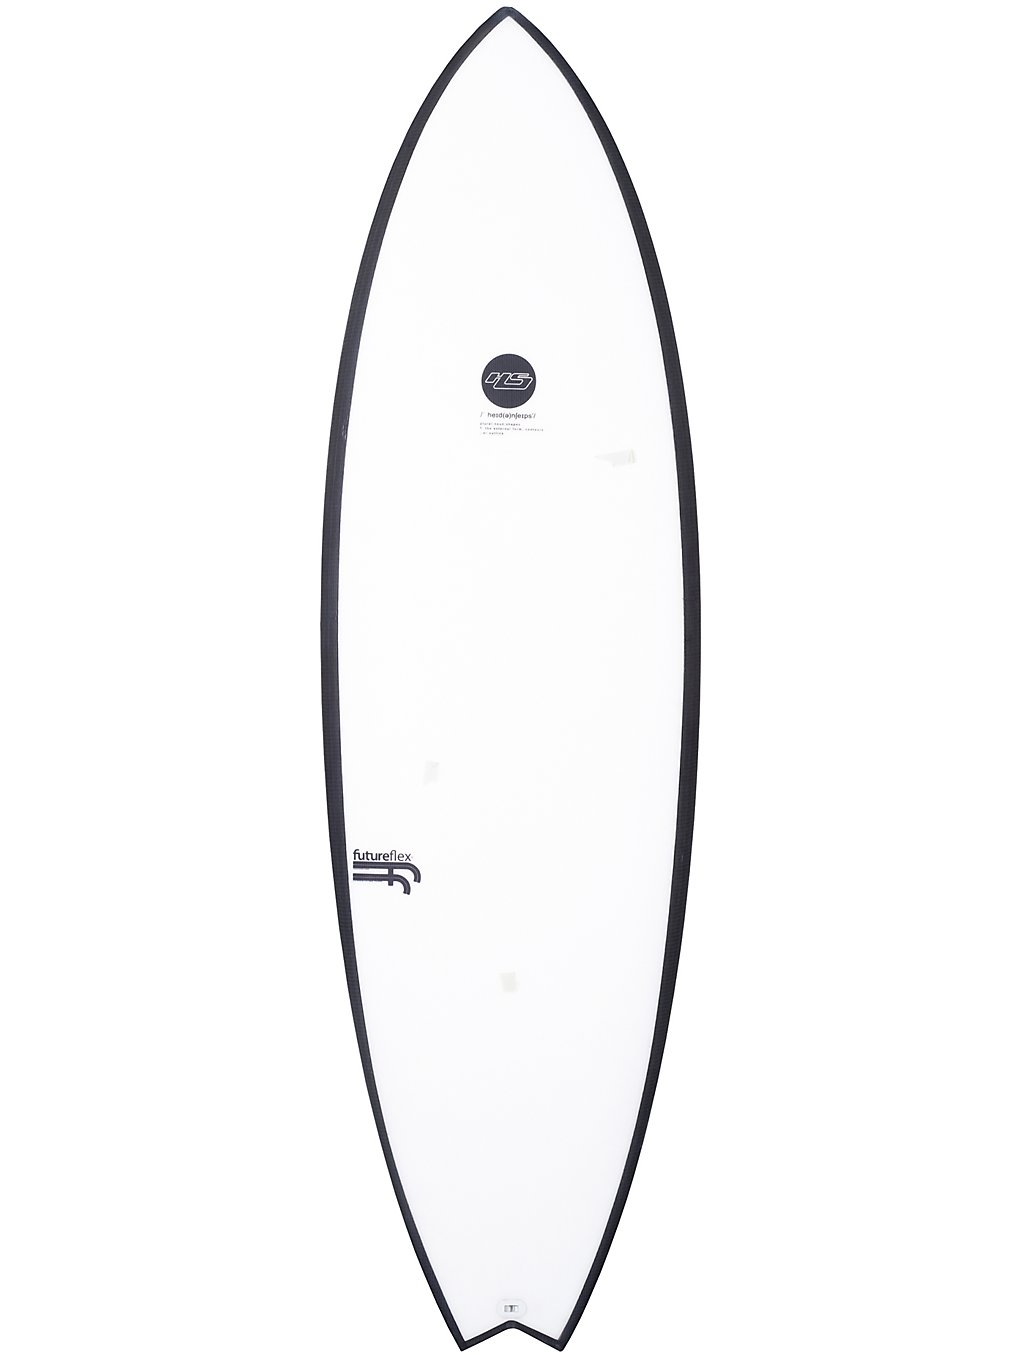 Haydenshapes HyptoKrypto StepUp FutureFlexFutures 6'4 Surfboard black circle branding